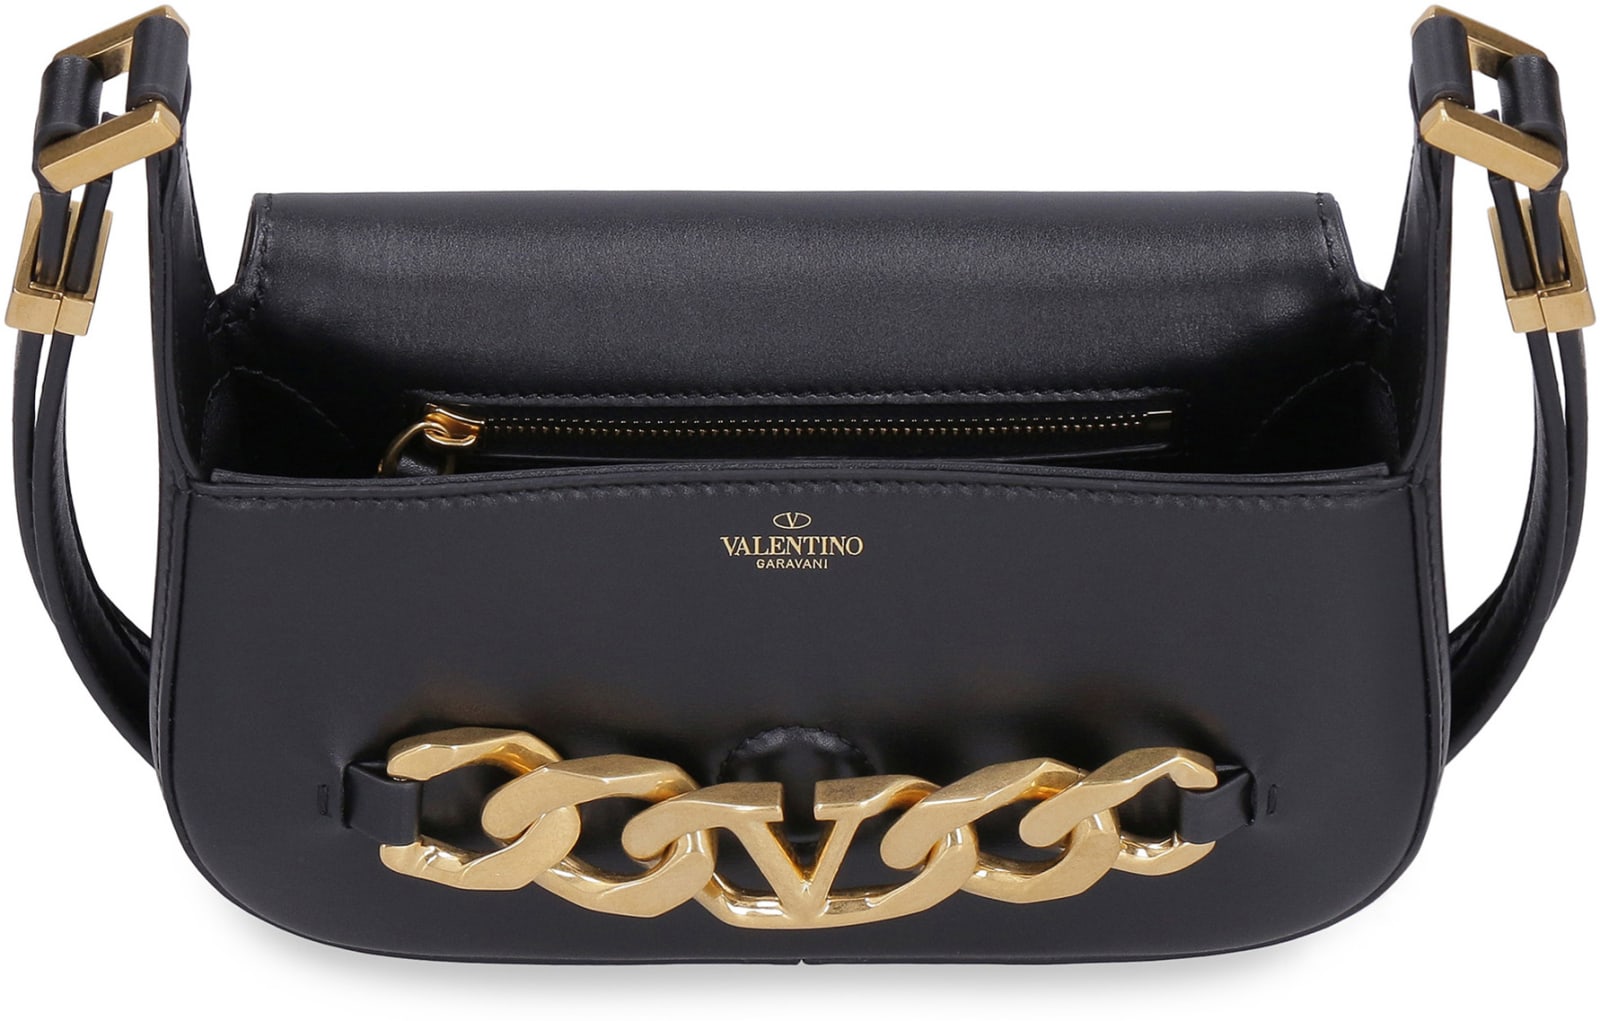 Valentino Garavani Introduces the VLogo Chain Bag - BagAddicts Anonymous